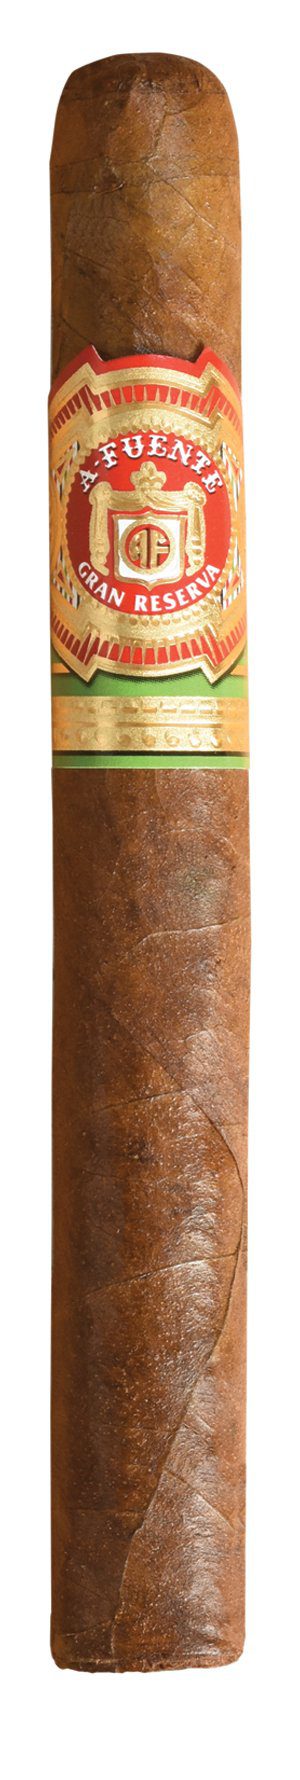 single arturo fuente cuban corona natural cigar